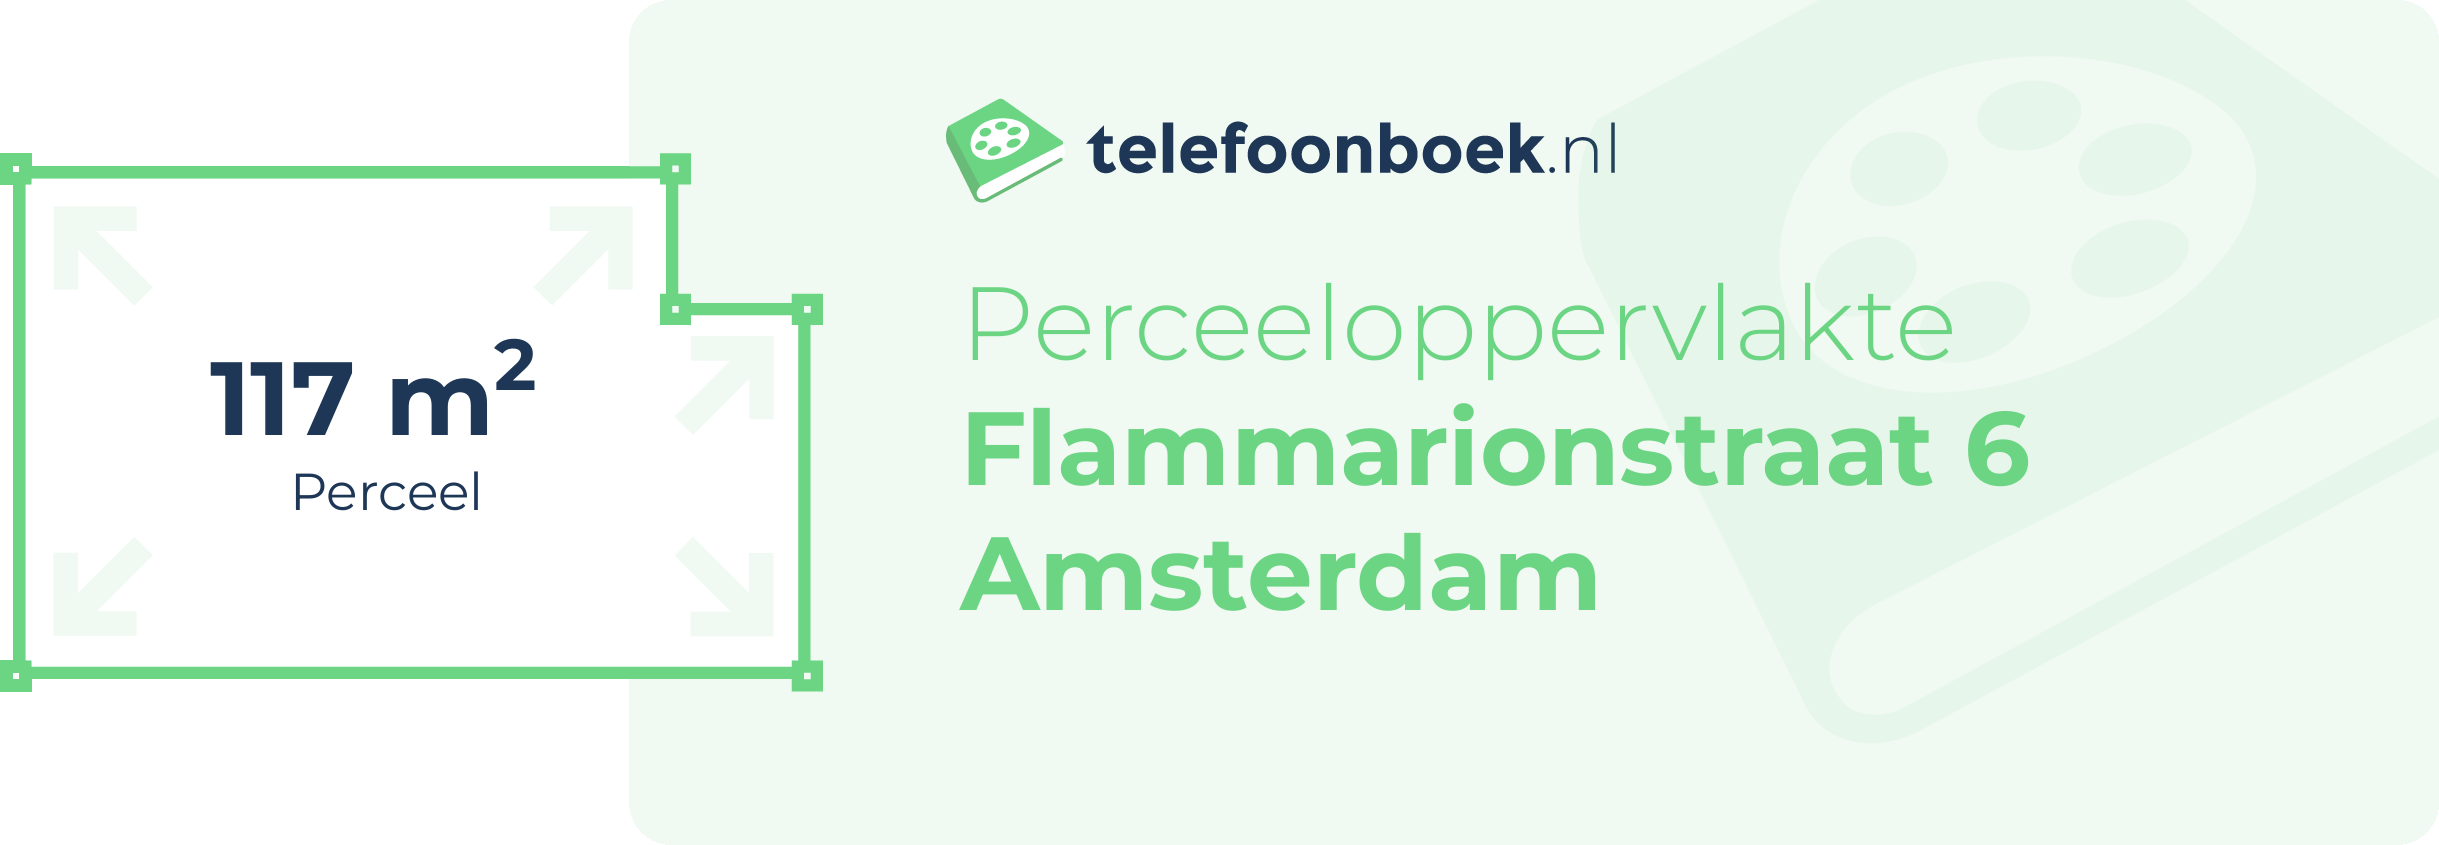 Perceeloppervlakte Flammarionstraat 6 Amsterdam